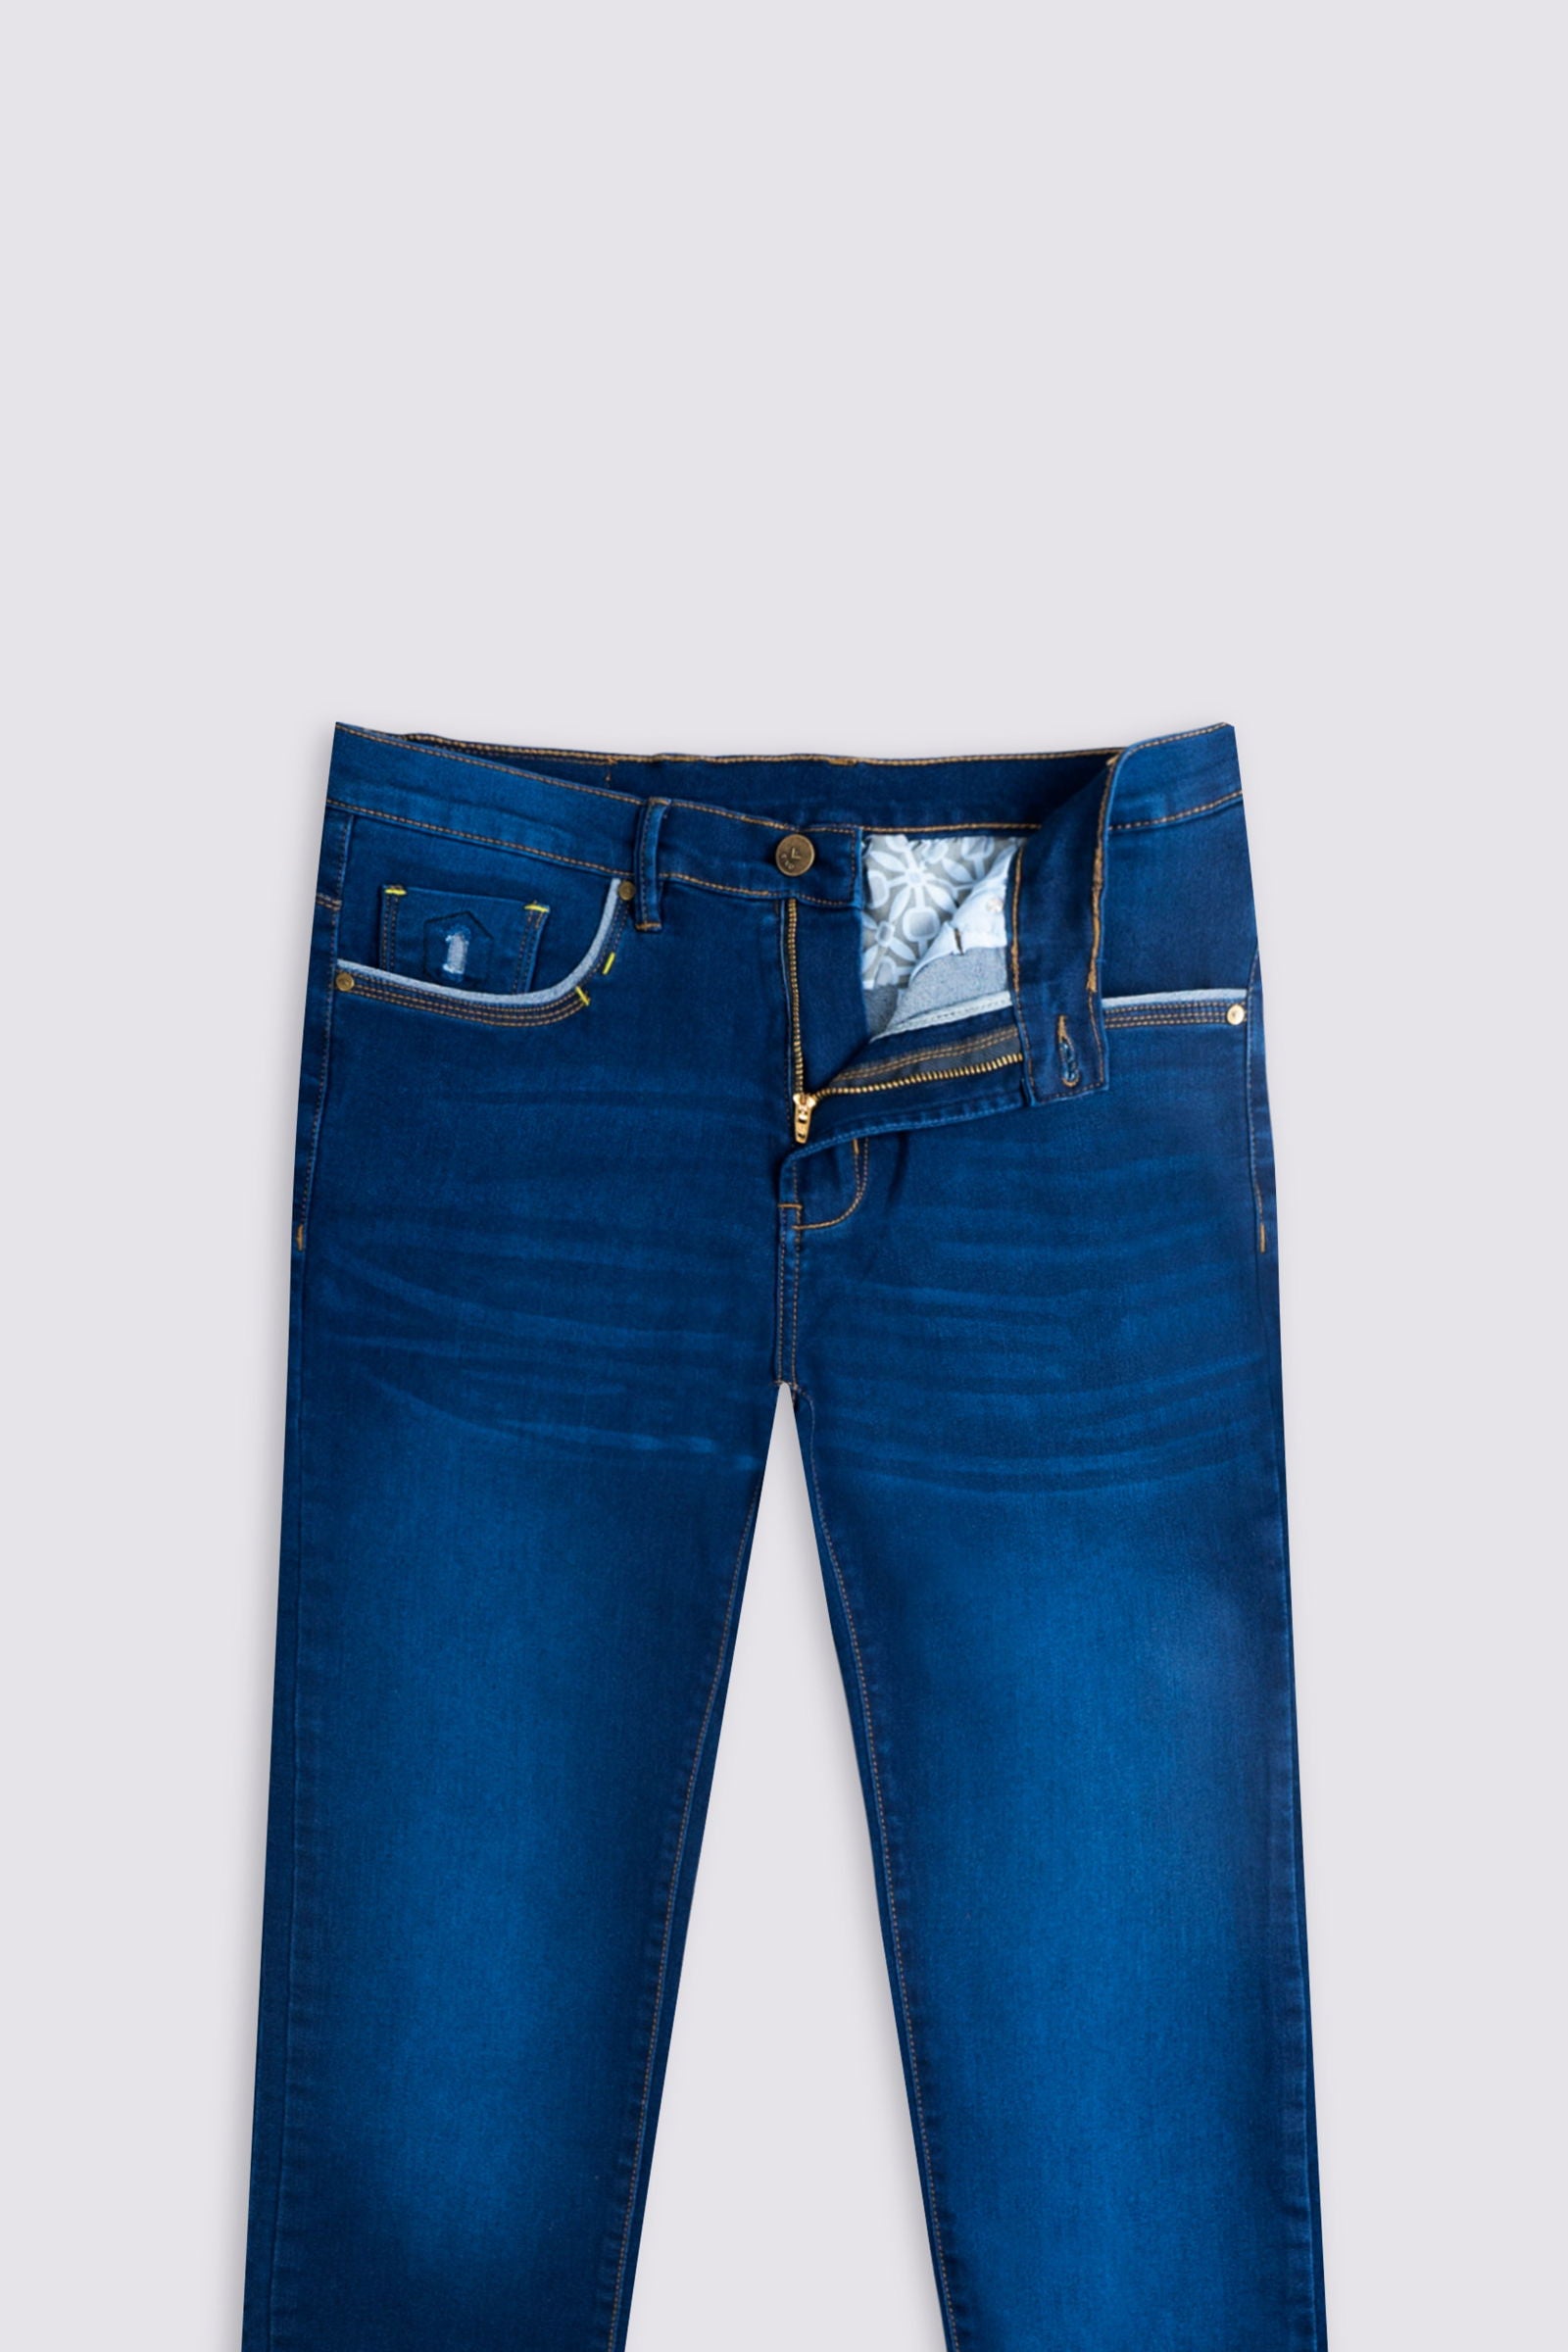 Power Stretch Denim Aqua Blue Jeans - The Axis Clothing